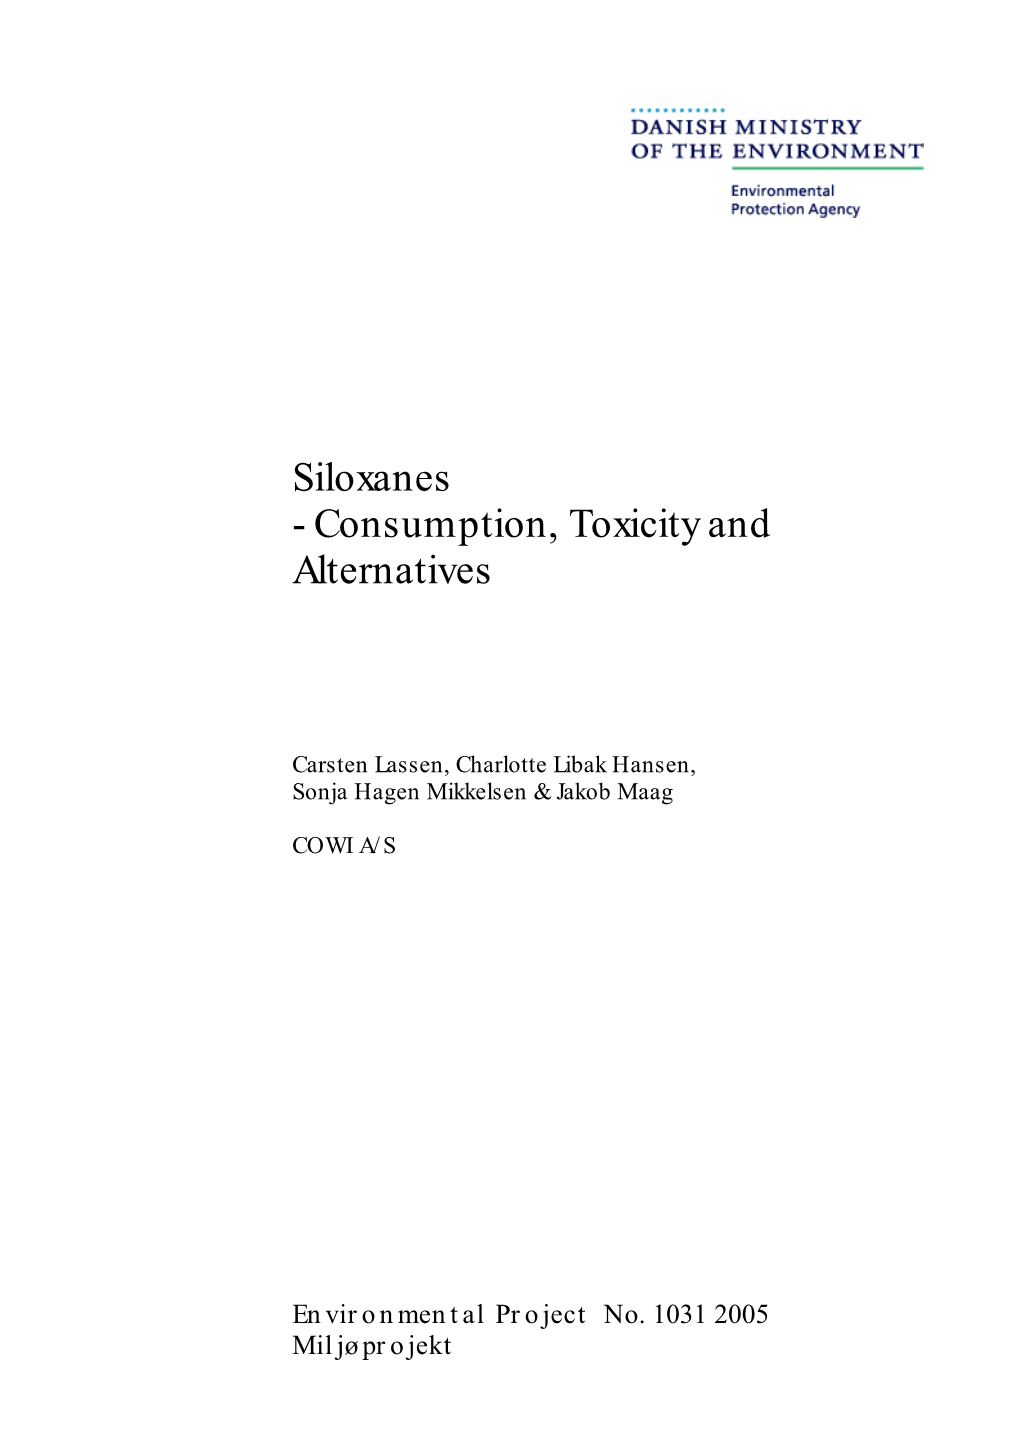 Siloxanes - Consumption, Toxicity and Alternatives